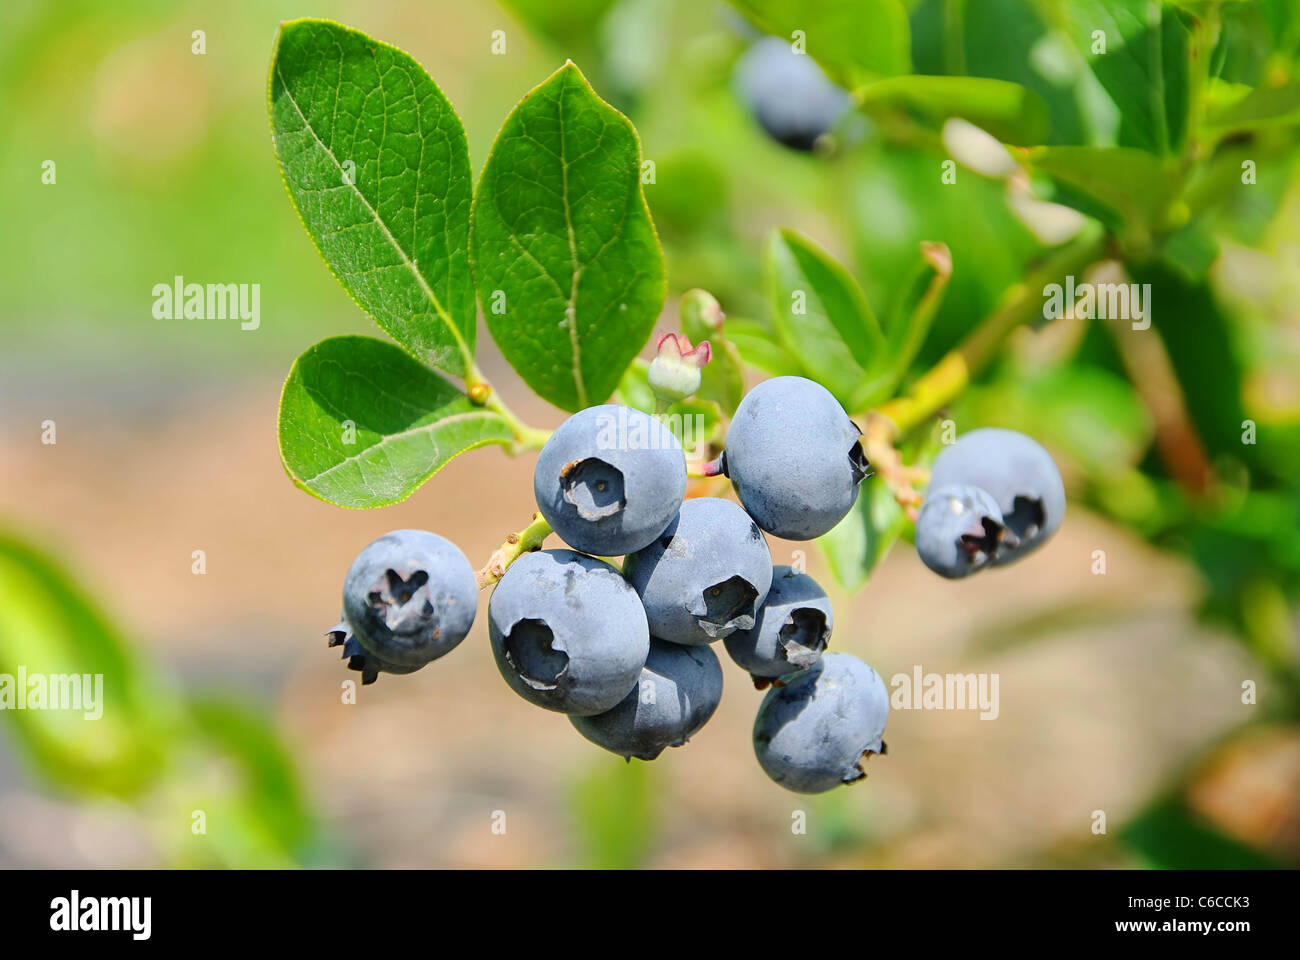 Heidelbeere am Strauch 01- blueberry on shrub 01 Stock Photo